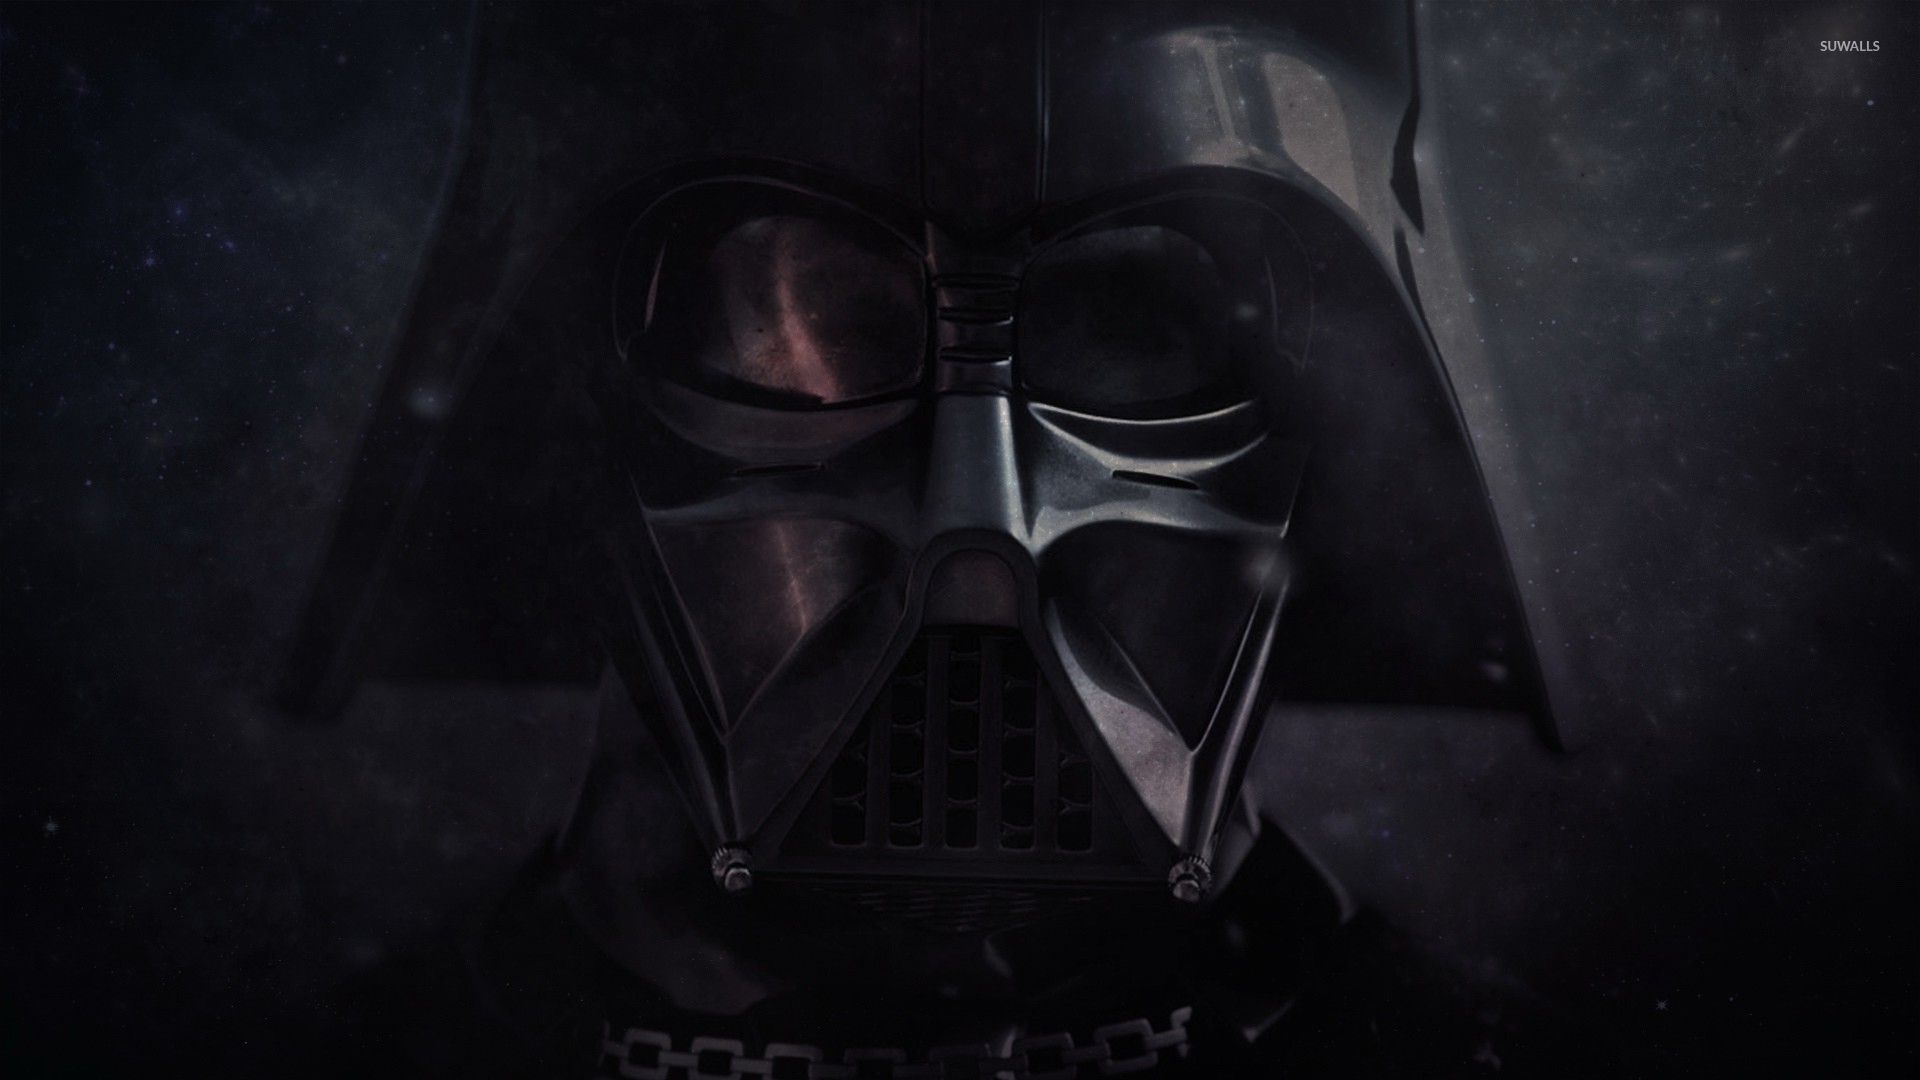 Fondo de pantalla de Darth Vader [4] - Fondos de pantalla de películas - # 27456